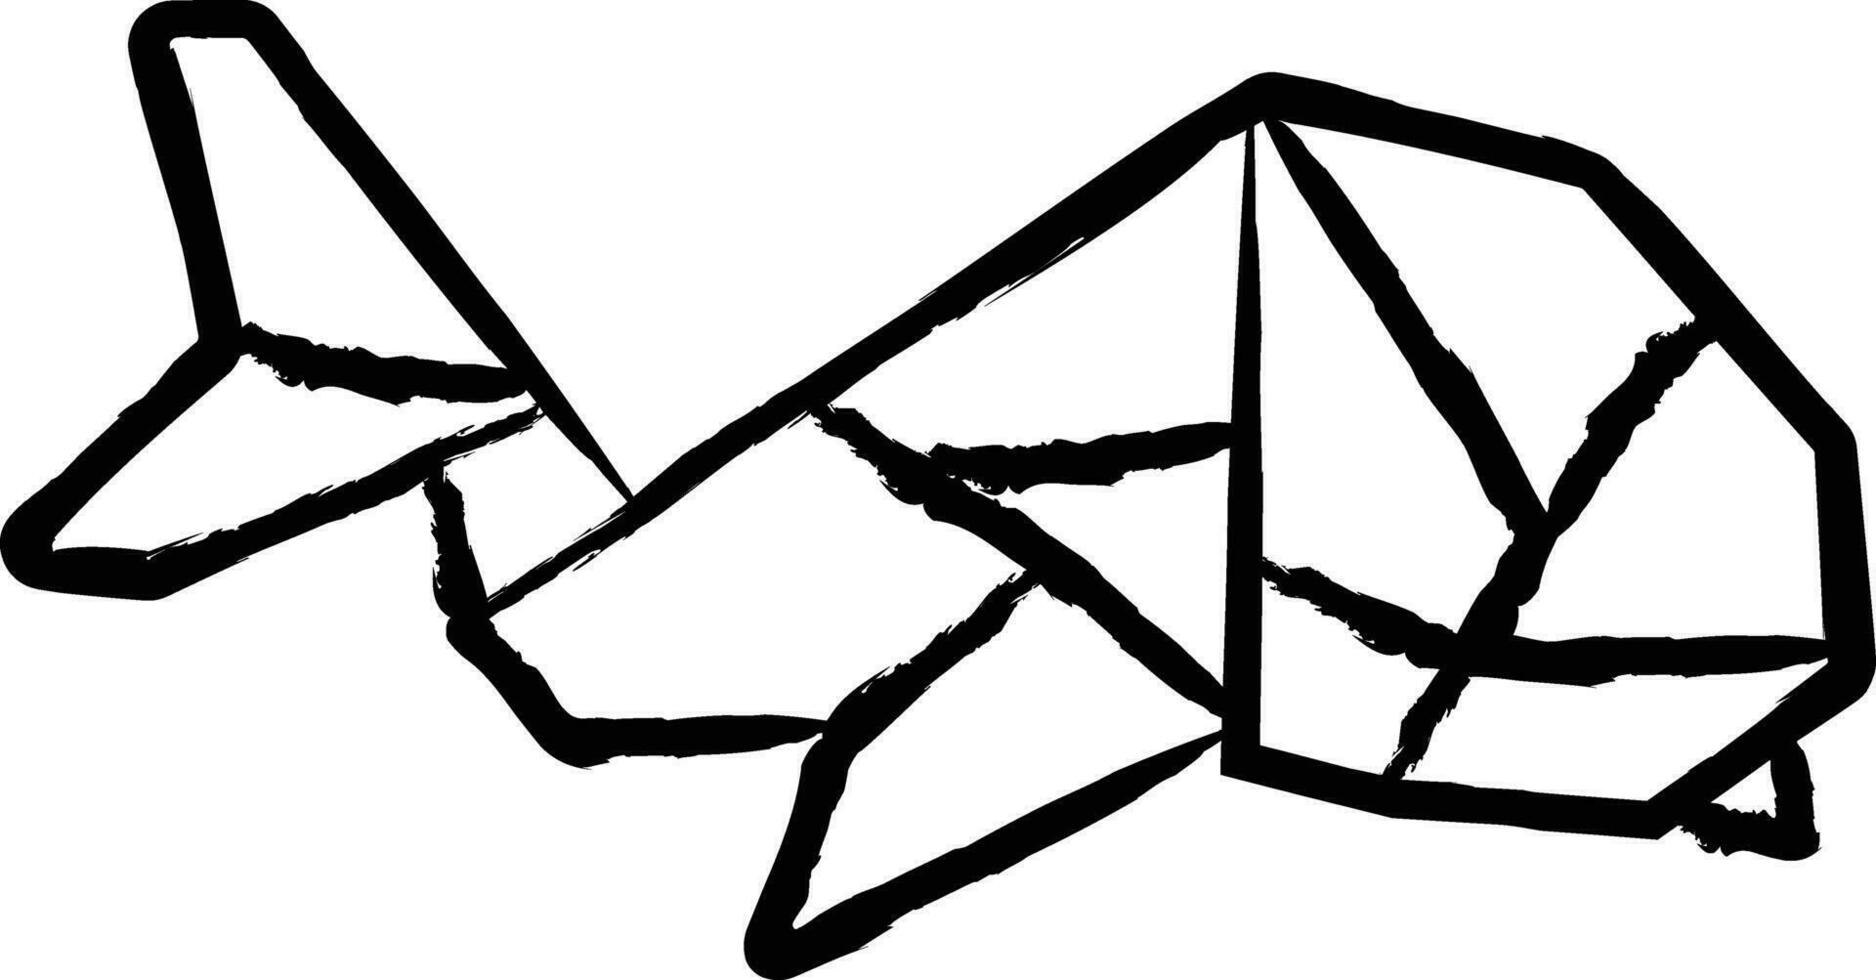 Dolphin hand drawn vector illustration